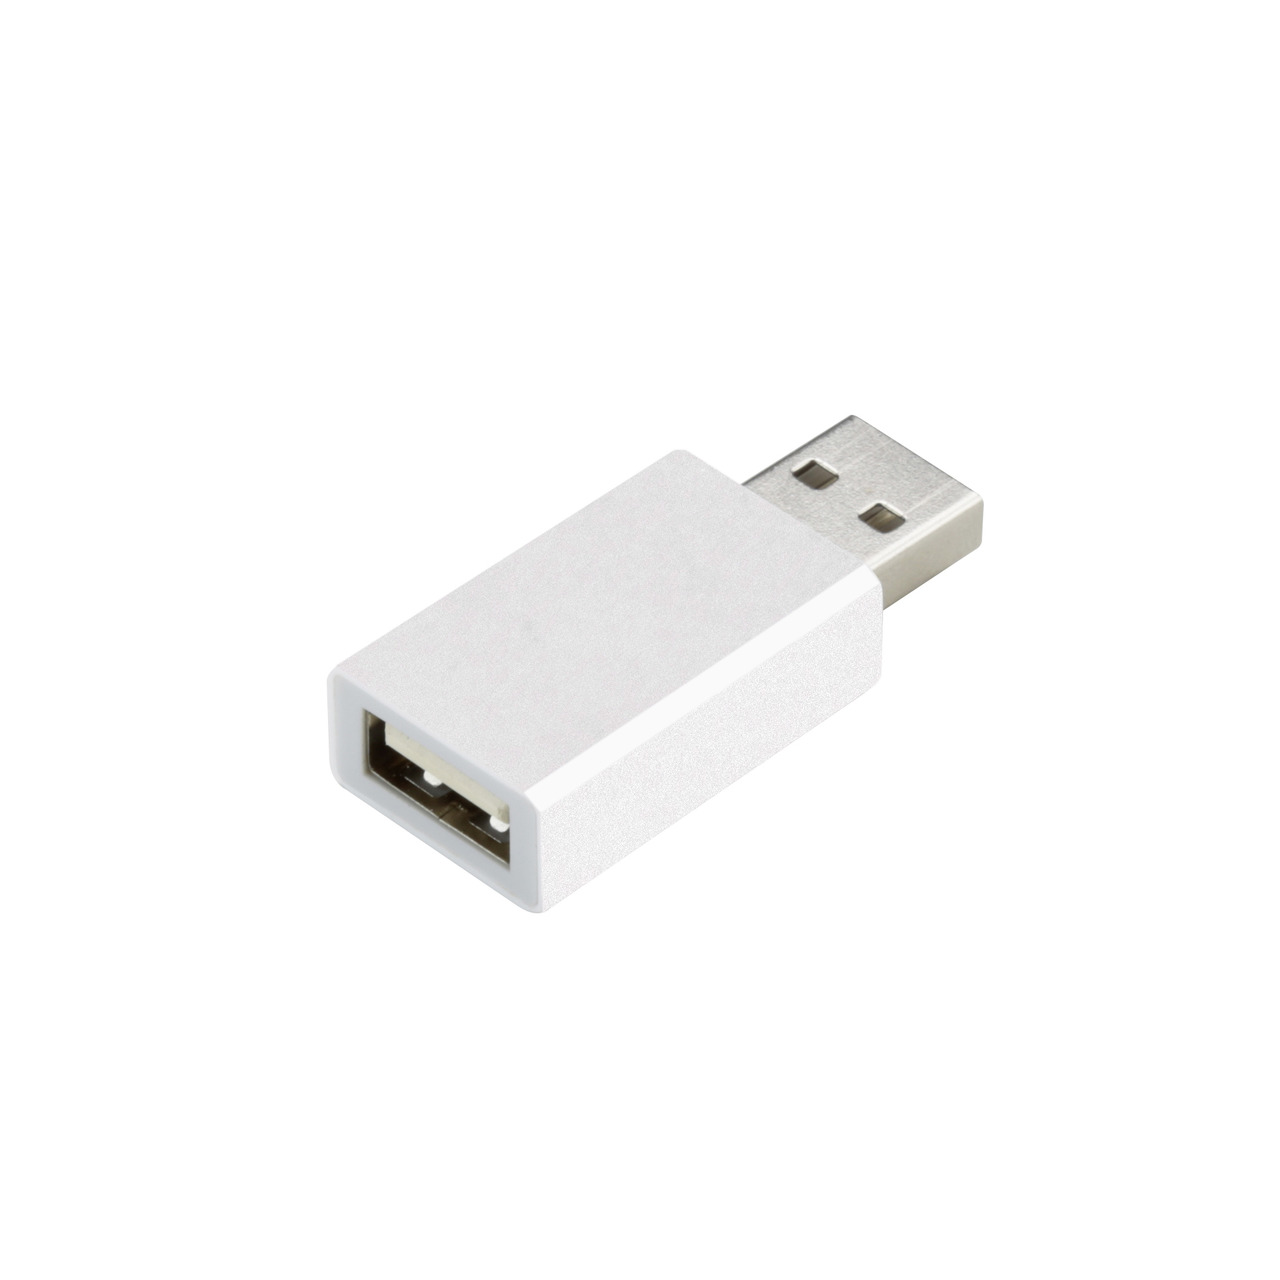 ZOGI USB-Datenblocker RXD-108A- Daten-Sync-Blocker für Smartphones und Tablets - Anti-Juice-Hacking